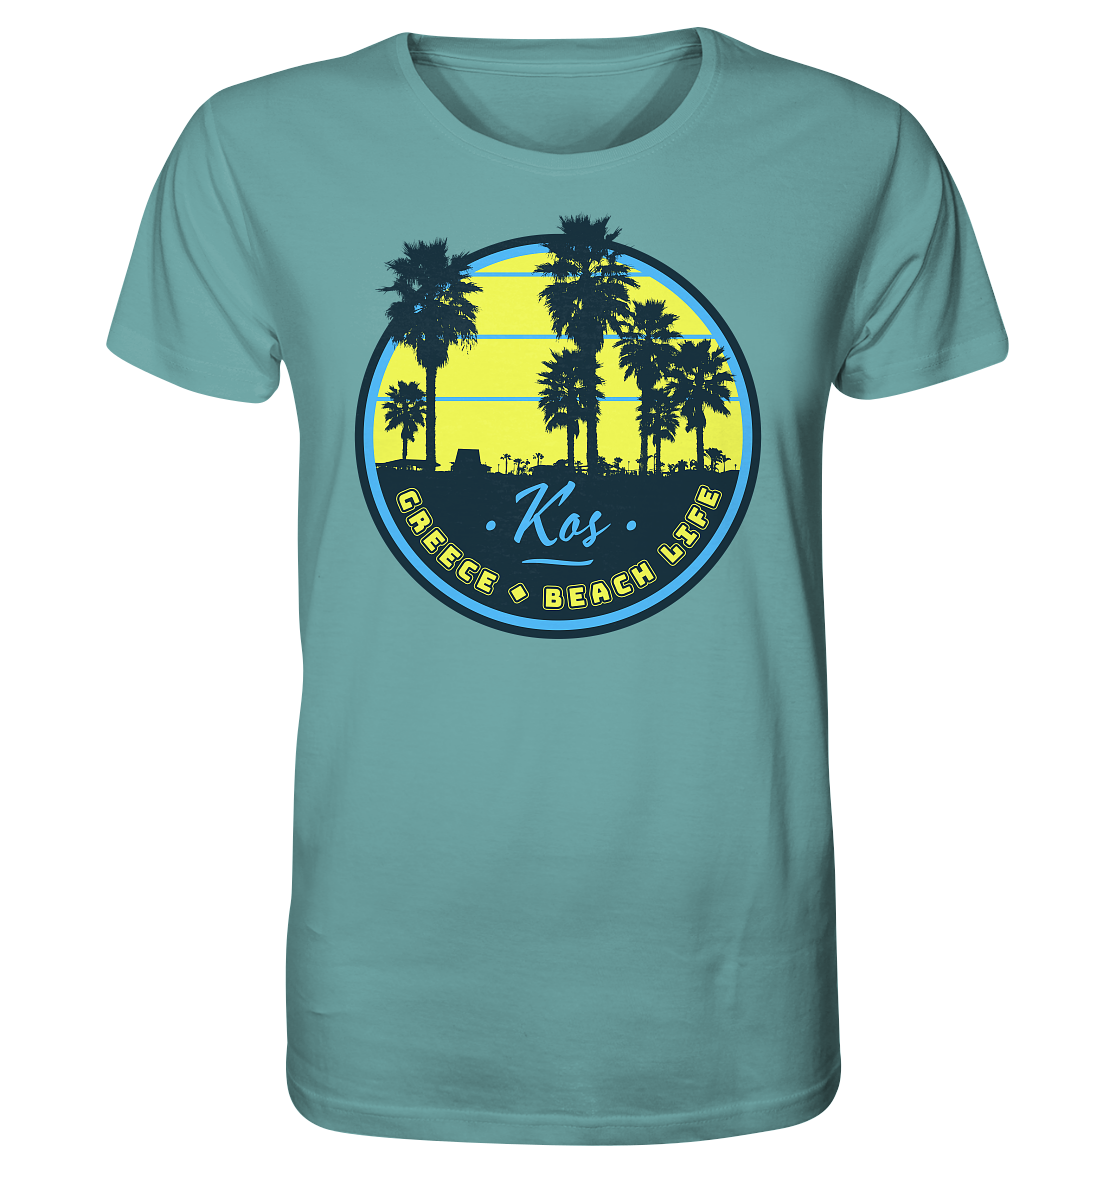 Kos Greece Beach Life - Organic Shirt